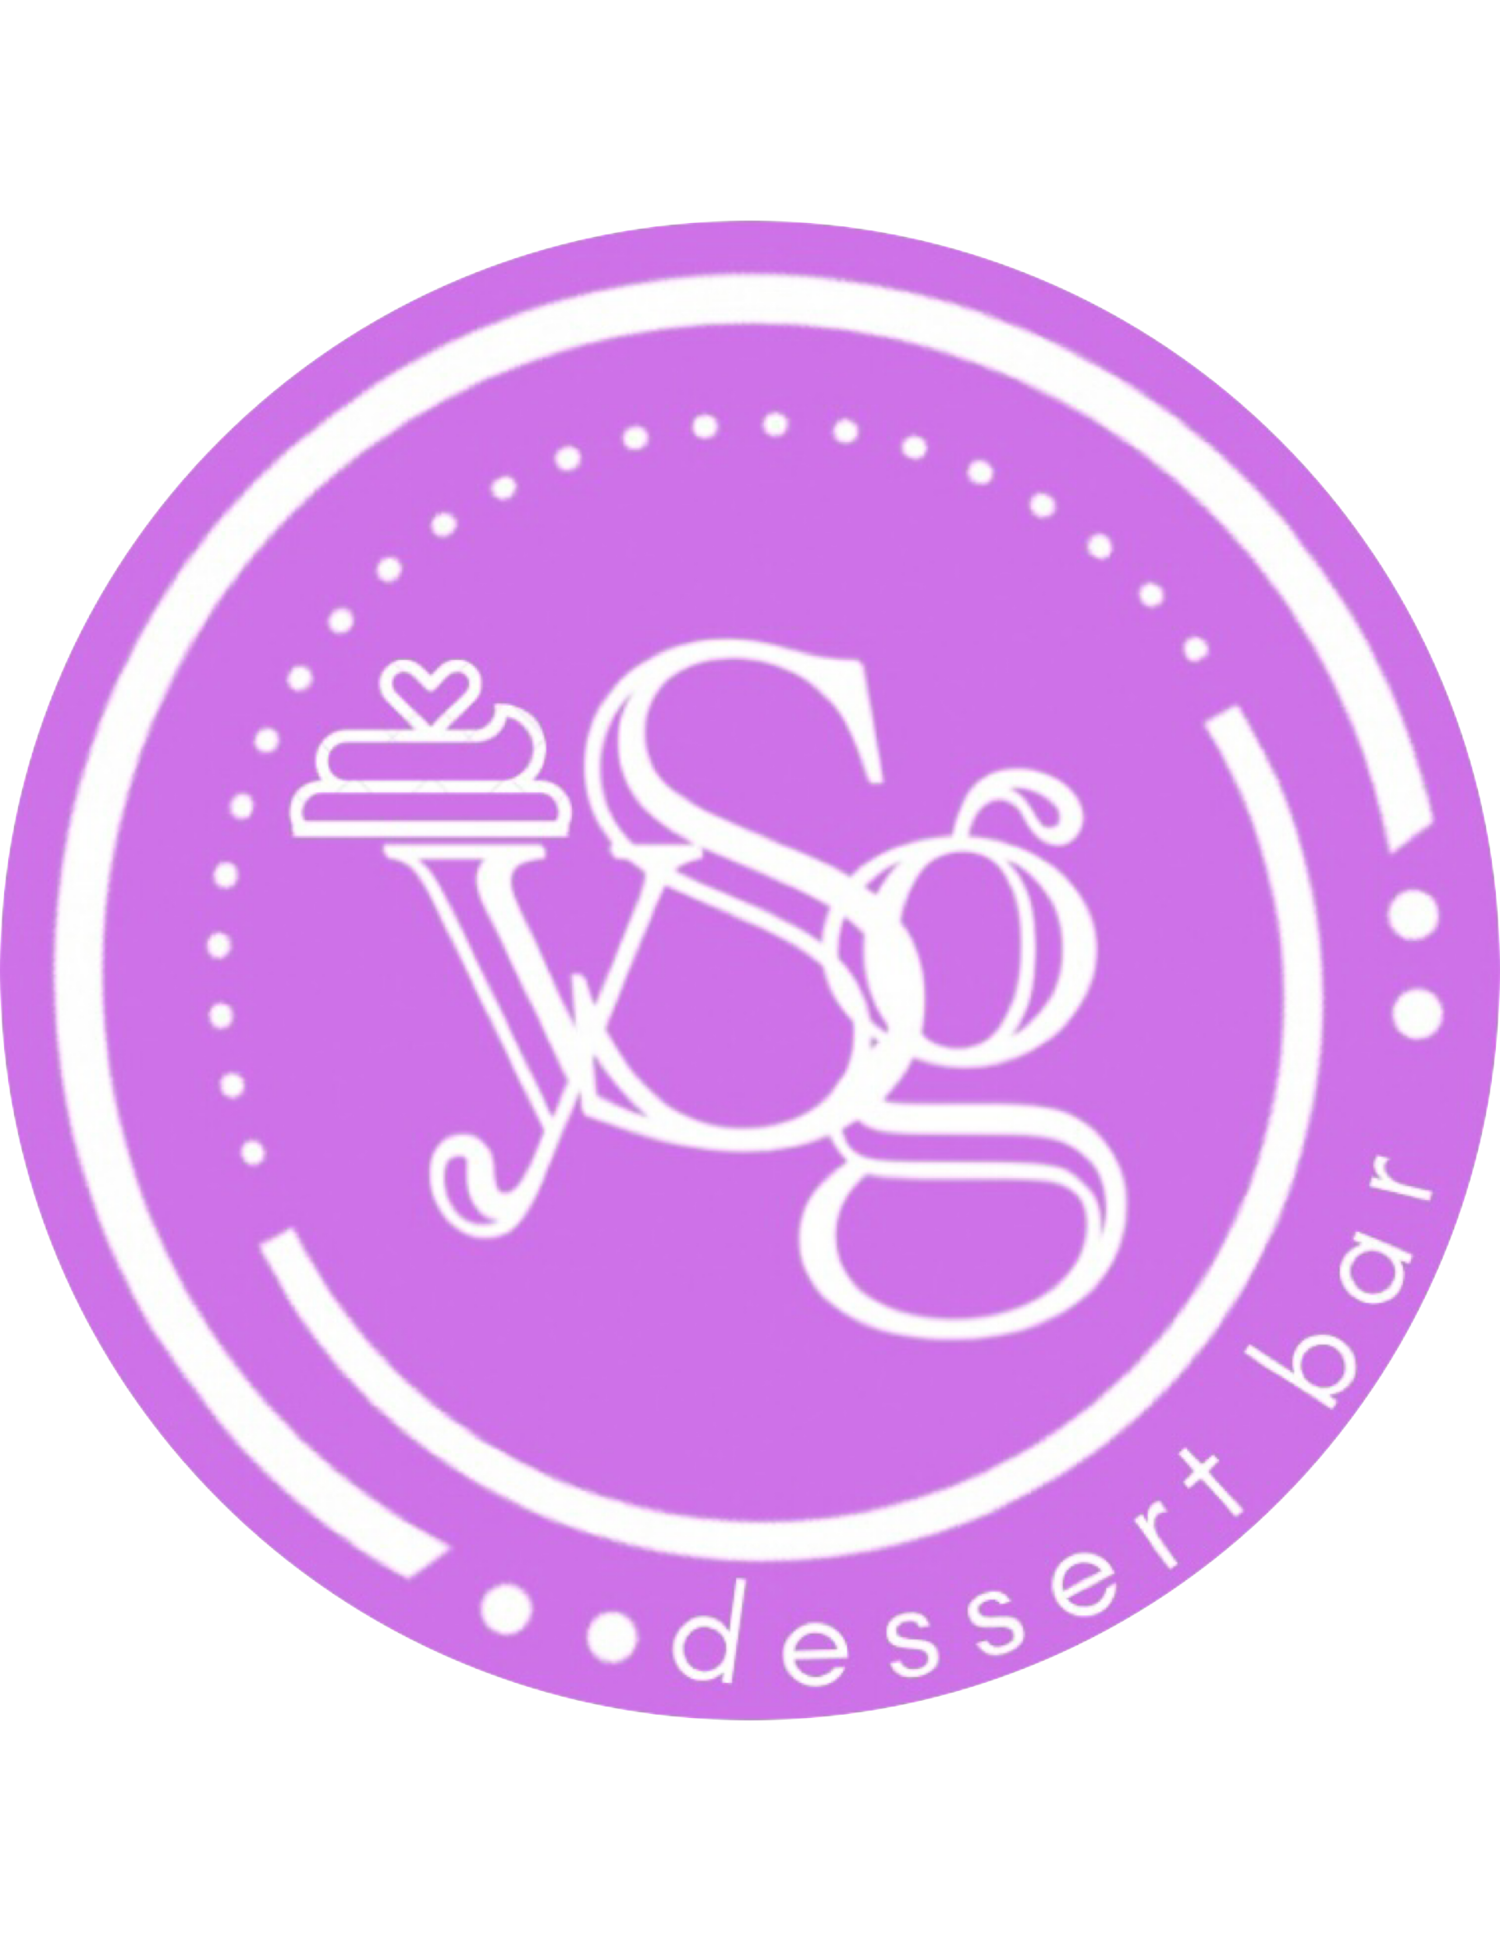 YSG Dessert Bar